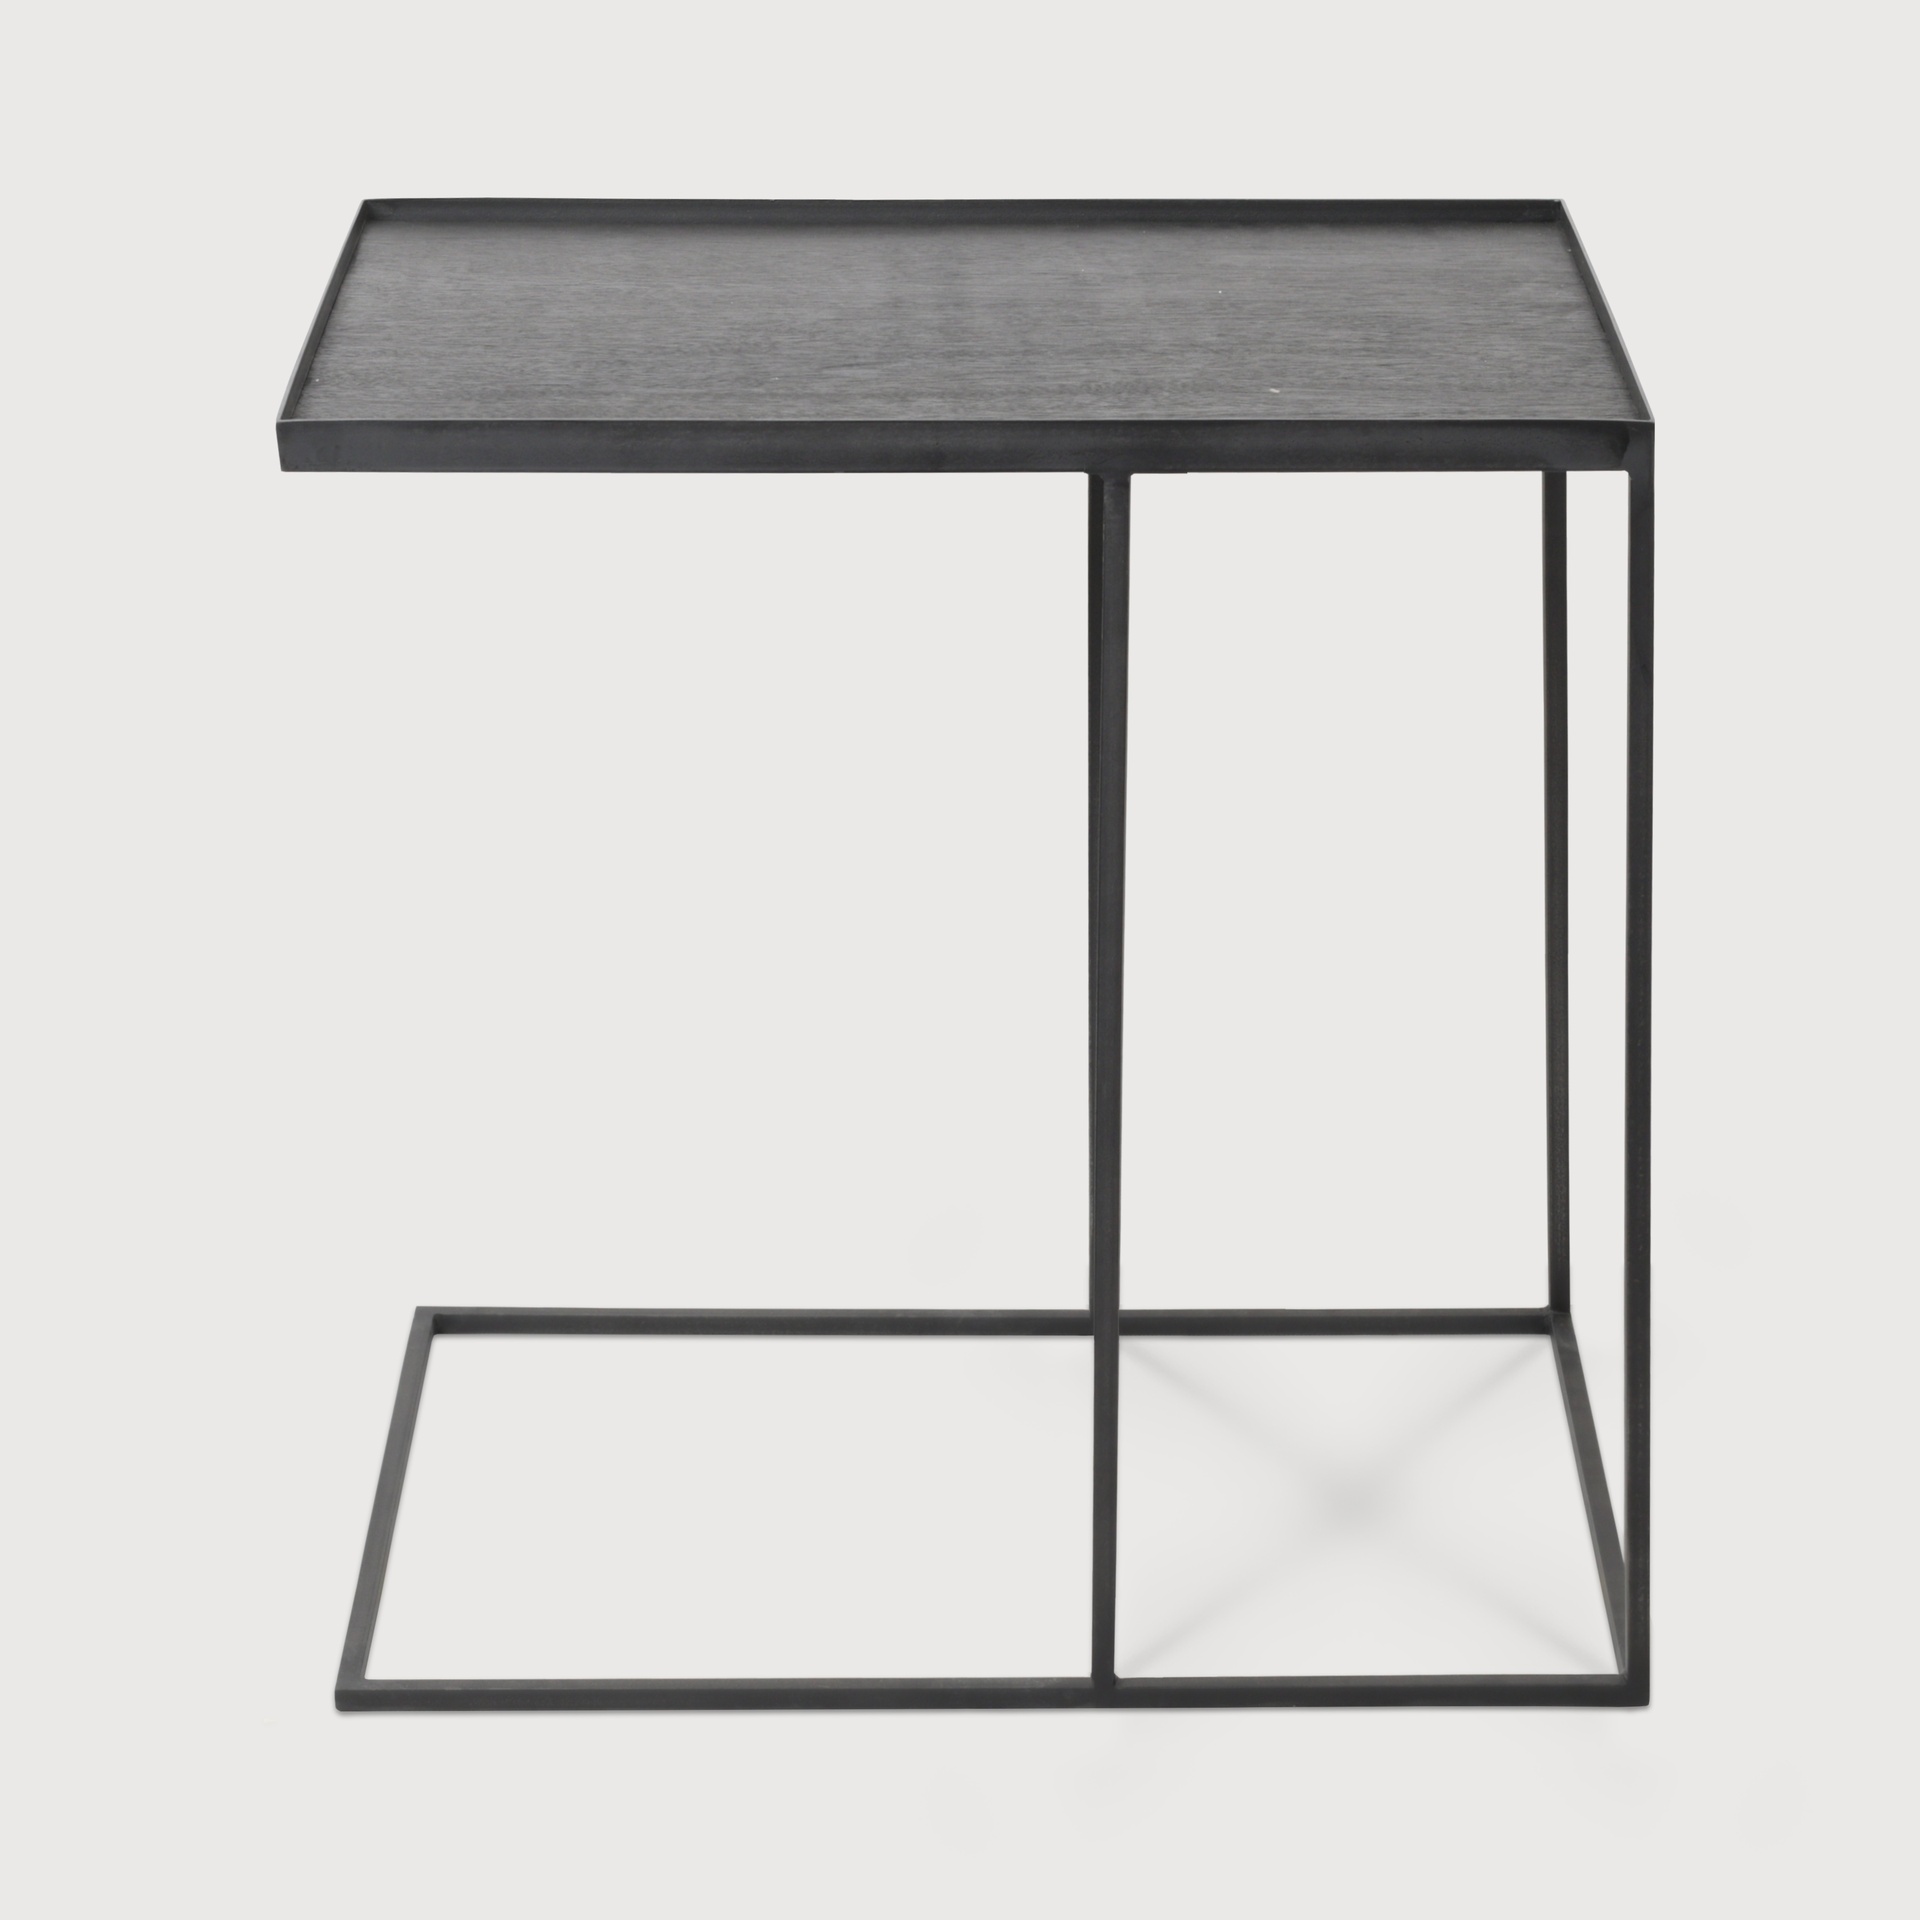 [20720*] Rectangular tray side table (62x47x64cm)